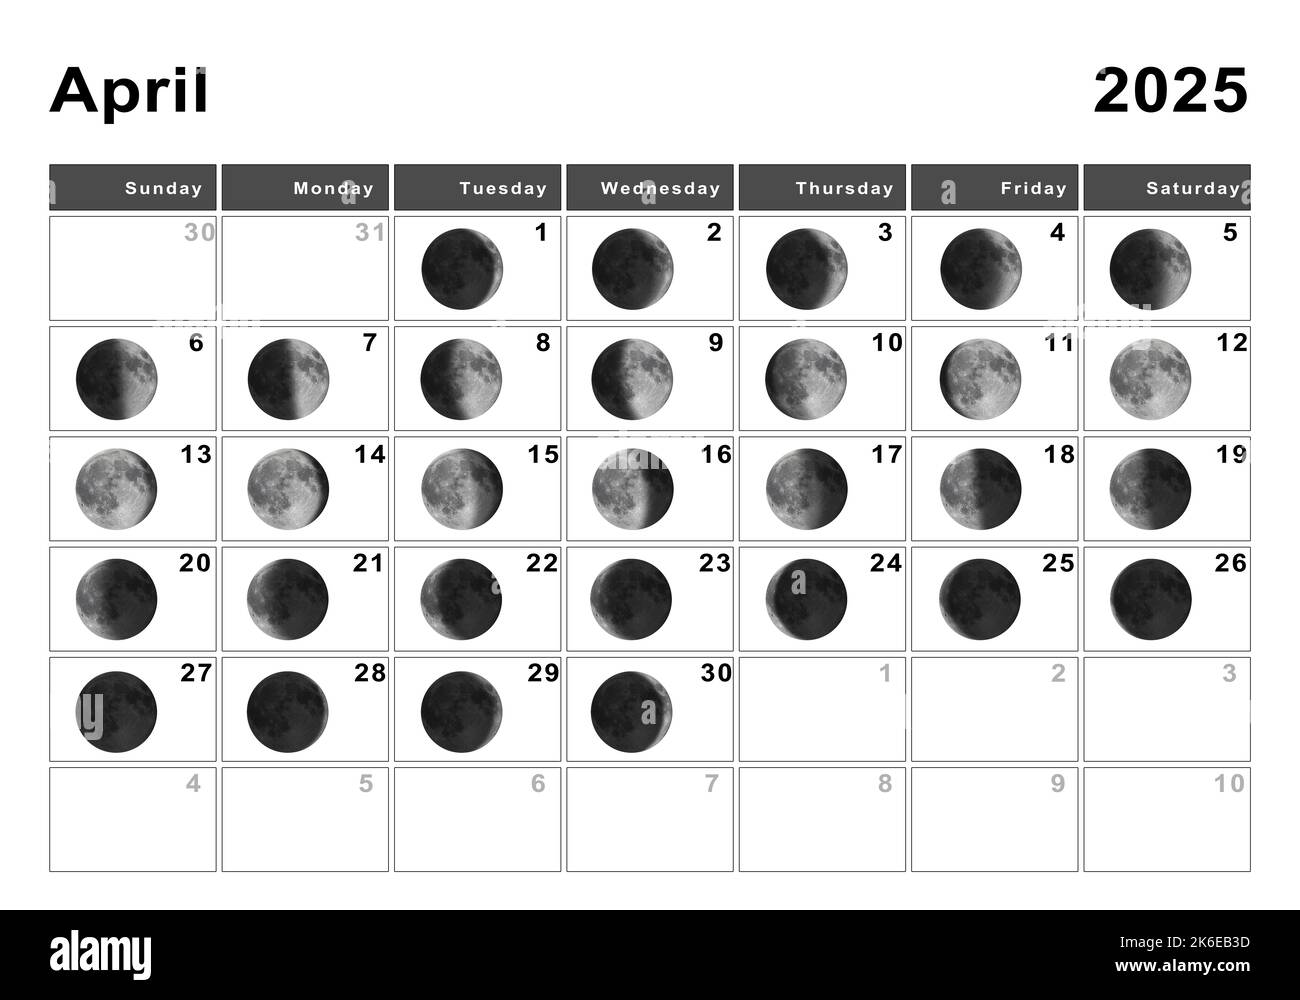 april-2025-lunar-calendar-moon-cycles-moon-phases-stock-photo-alamy